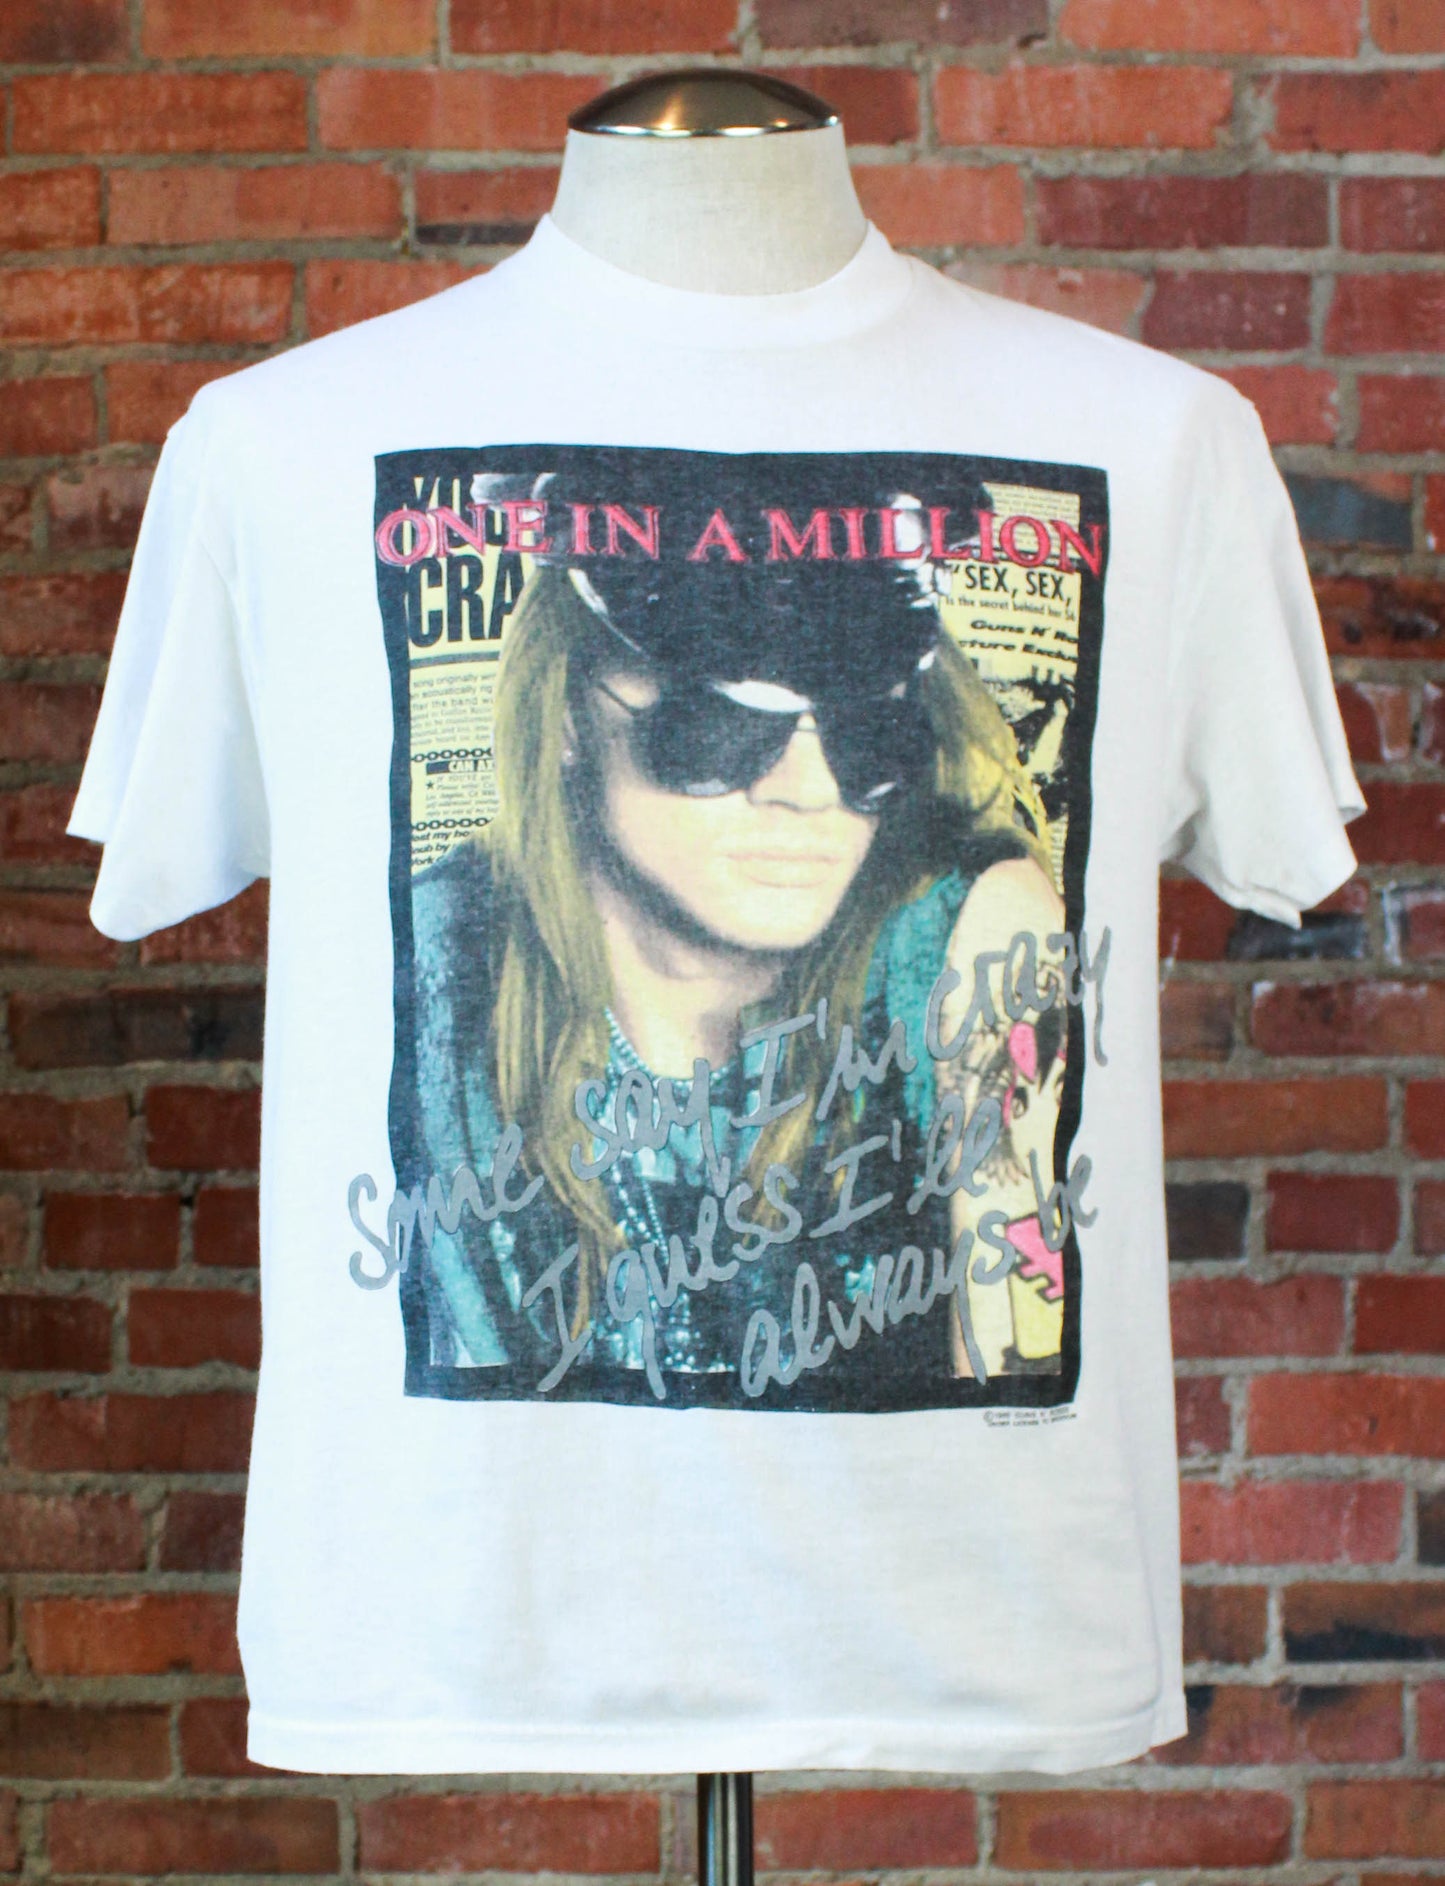 Vintage 1989 Guns 'N' Roses Concert T Shirt One In A Million Lies White Unisex Medium/LargeVintage Guns 'N' Roses One In A Million Lies Concert T Shirt 1989 White Medium